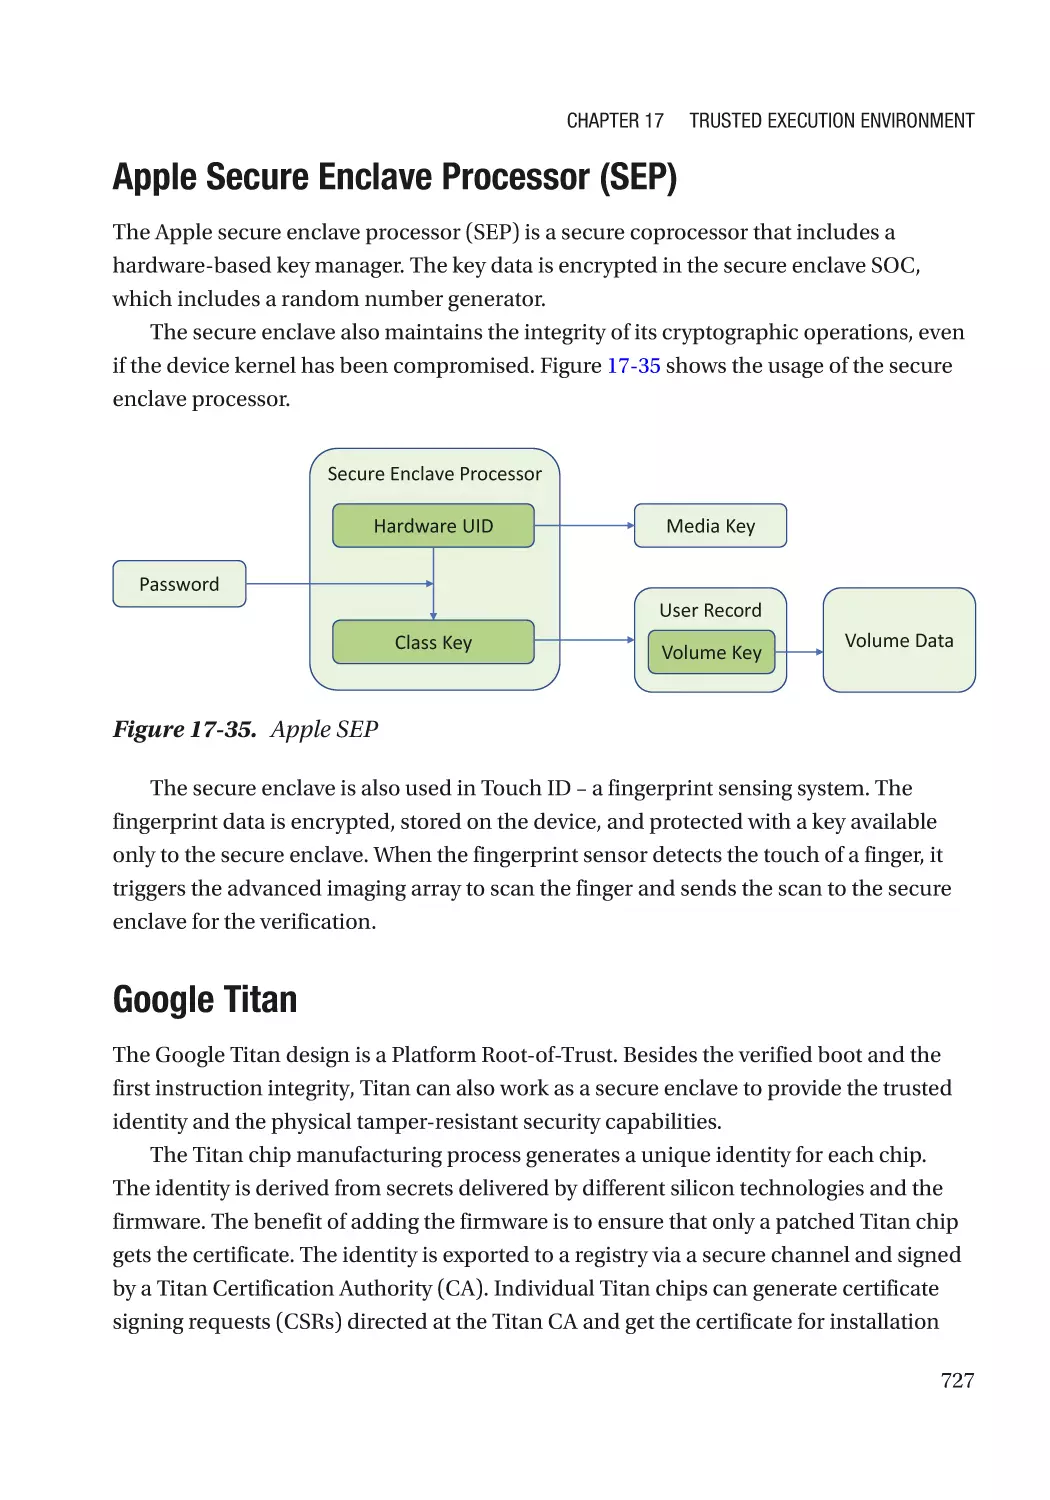 Apple Secure Enclave Processor (SEP)
Google Titan